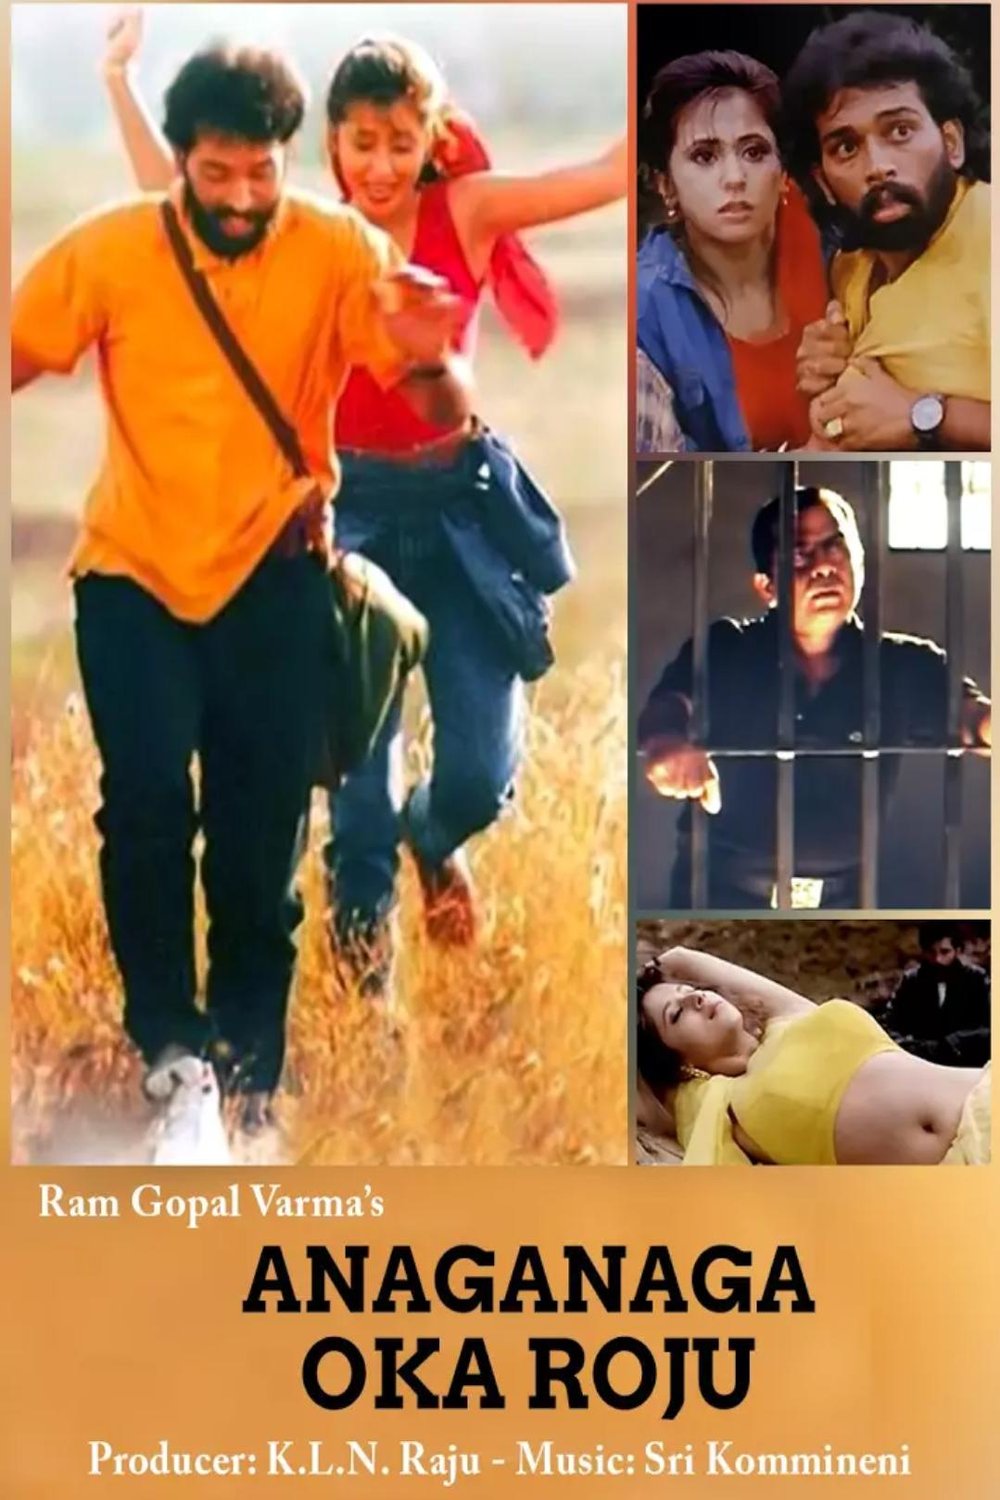 Telugu poster of the movie Anaganaga Oka Roju